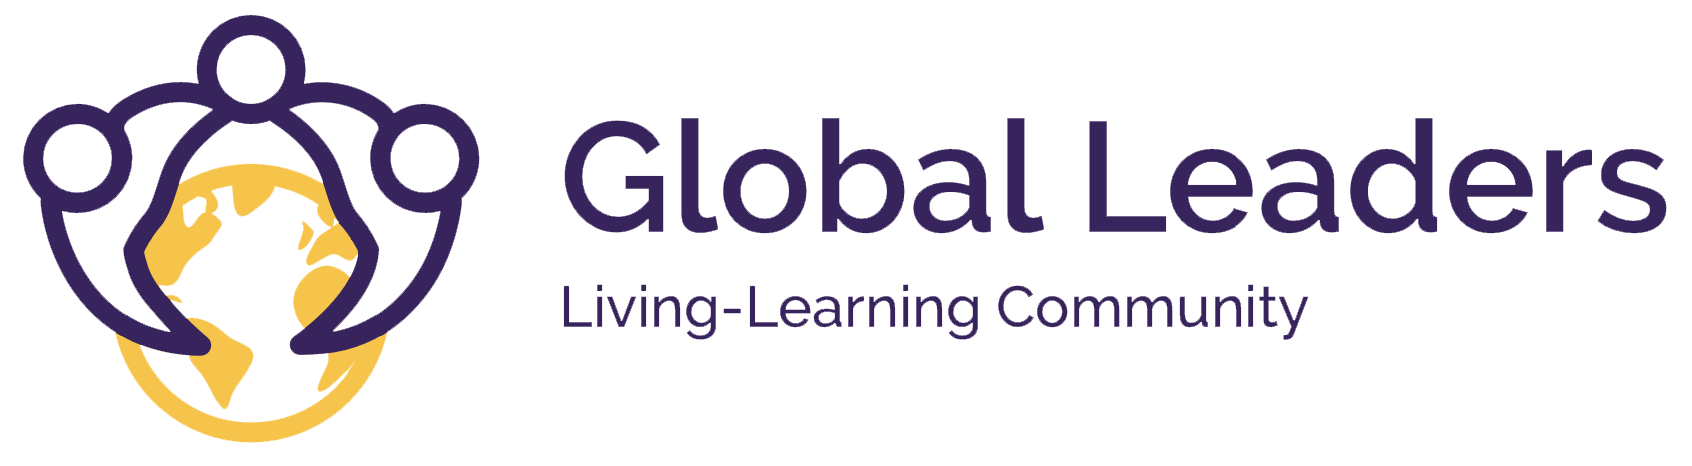 Global Leaders Living-Learning Community